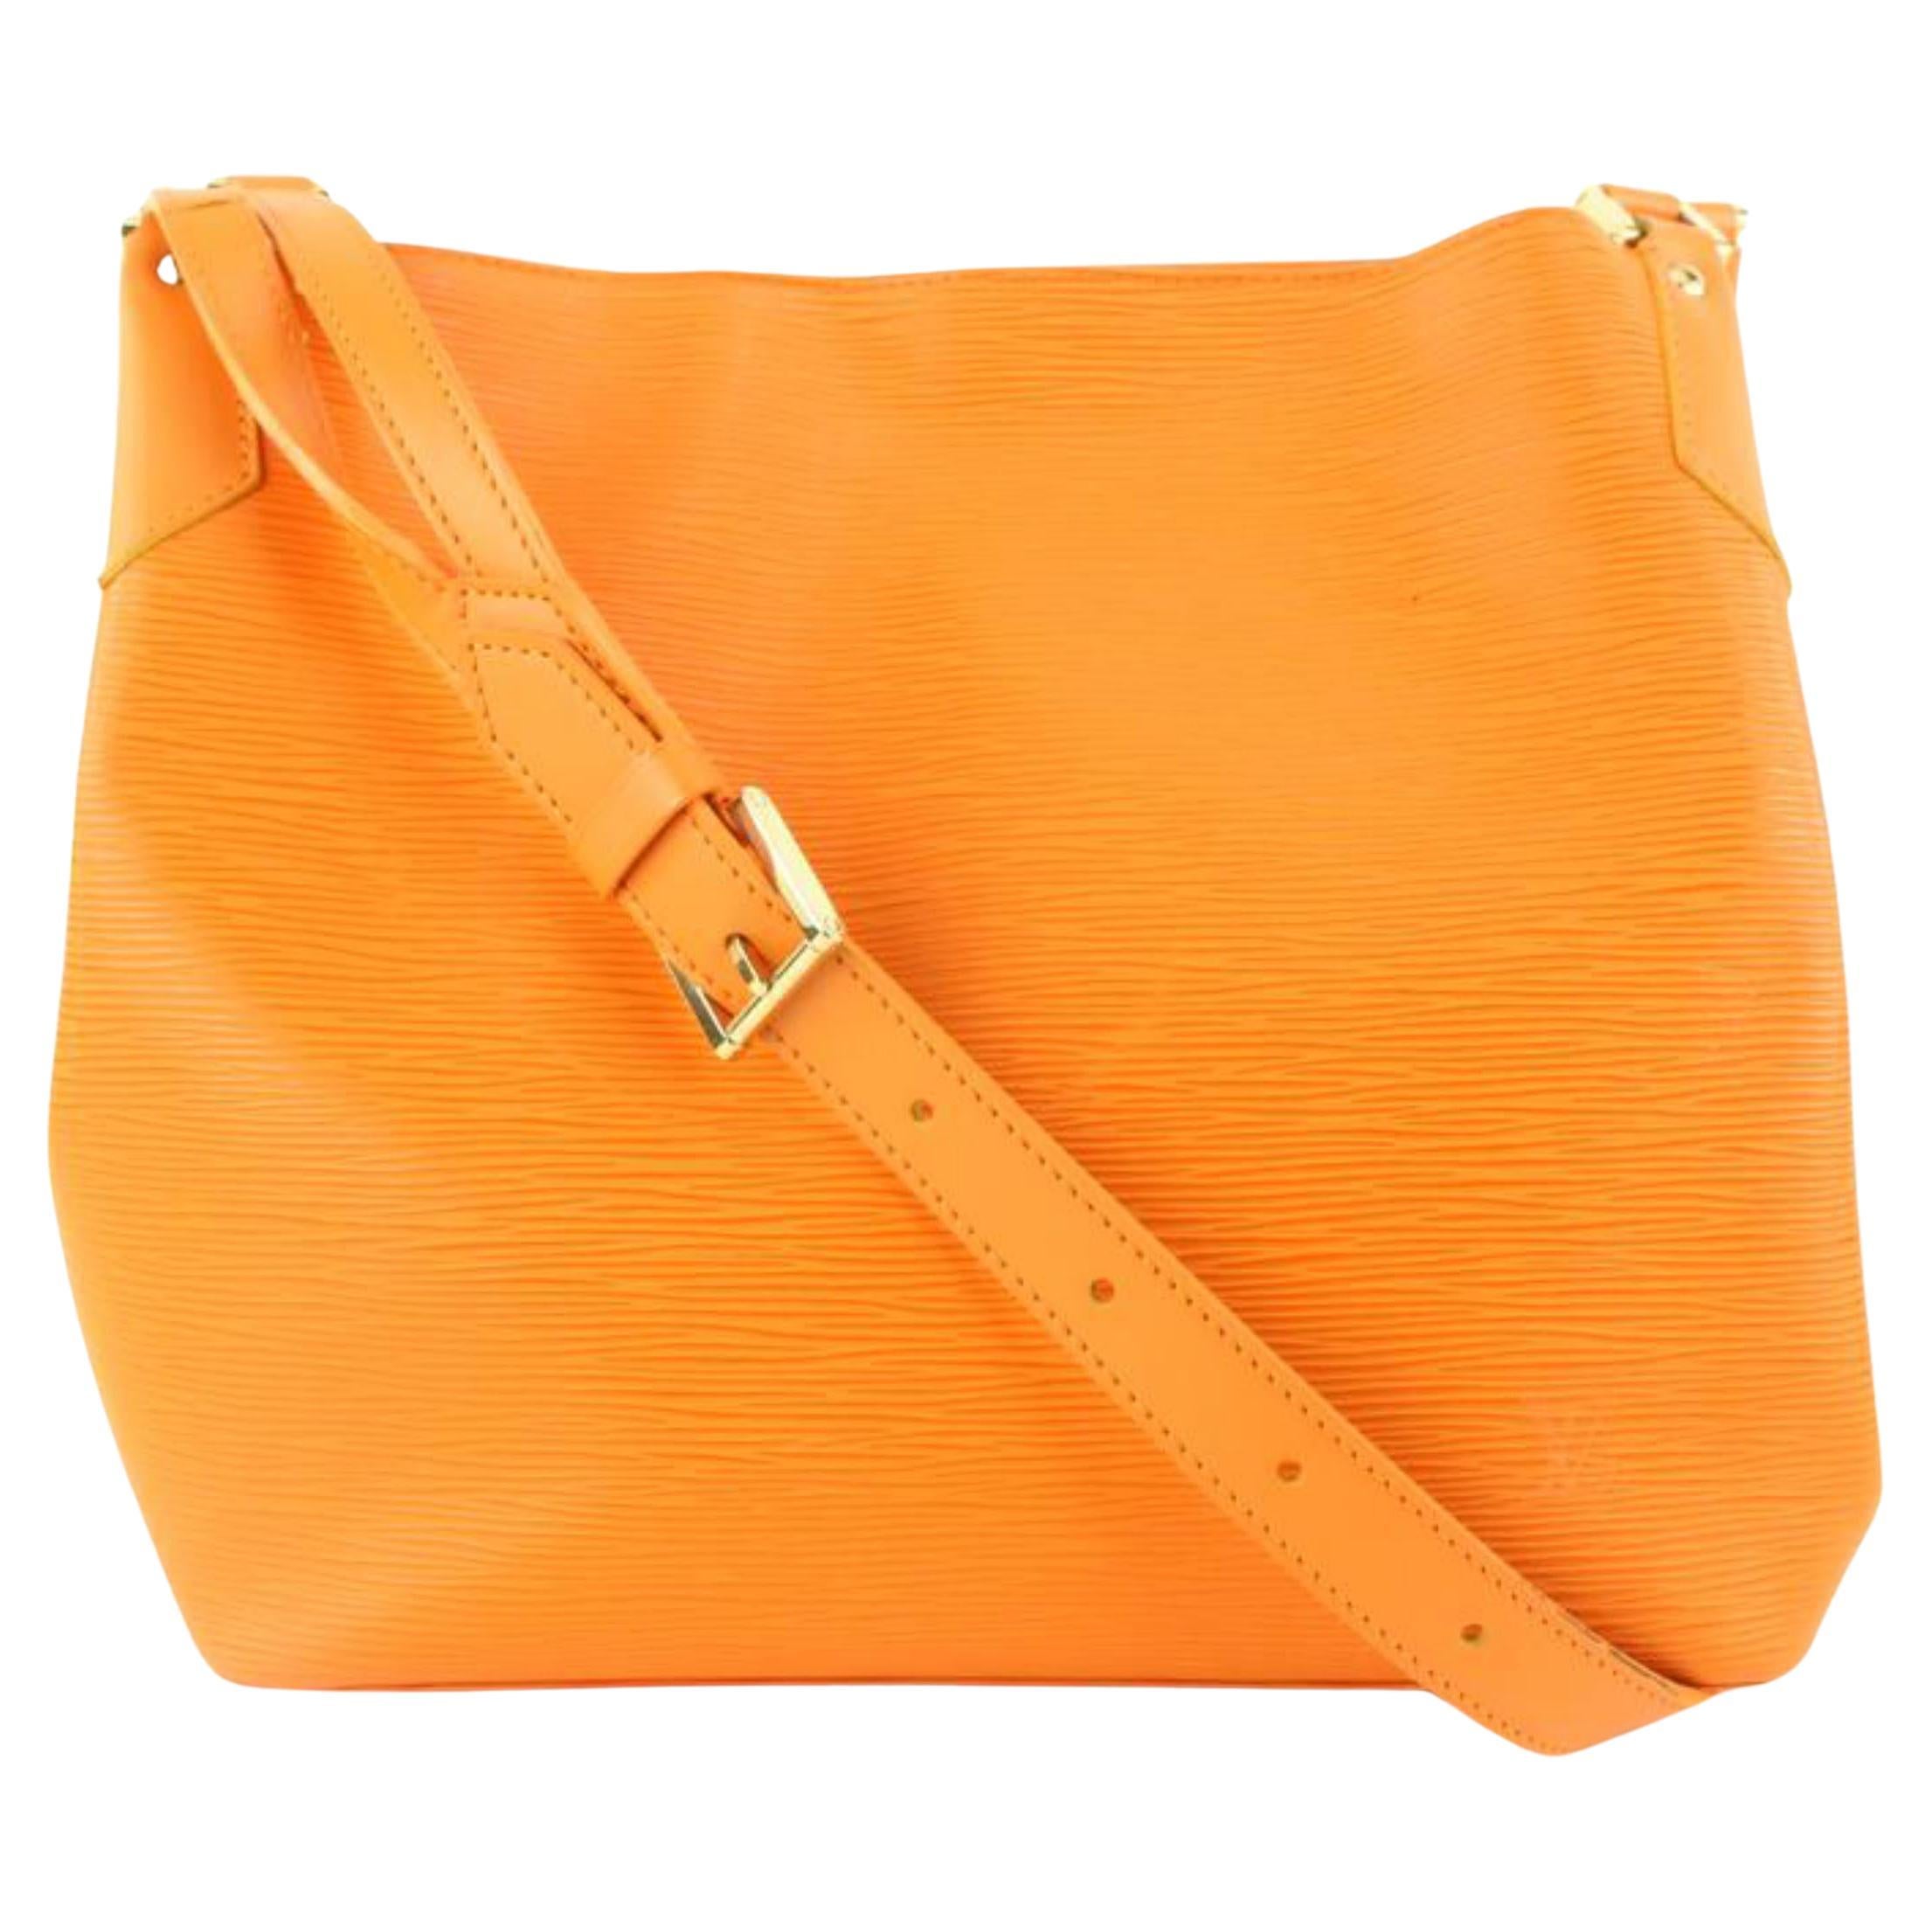 Louis Vuitton Mandarin Orange Epi Leather Mandara MM Hobo Shoulder bag 16lv38